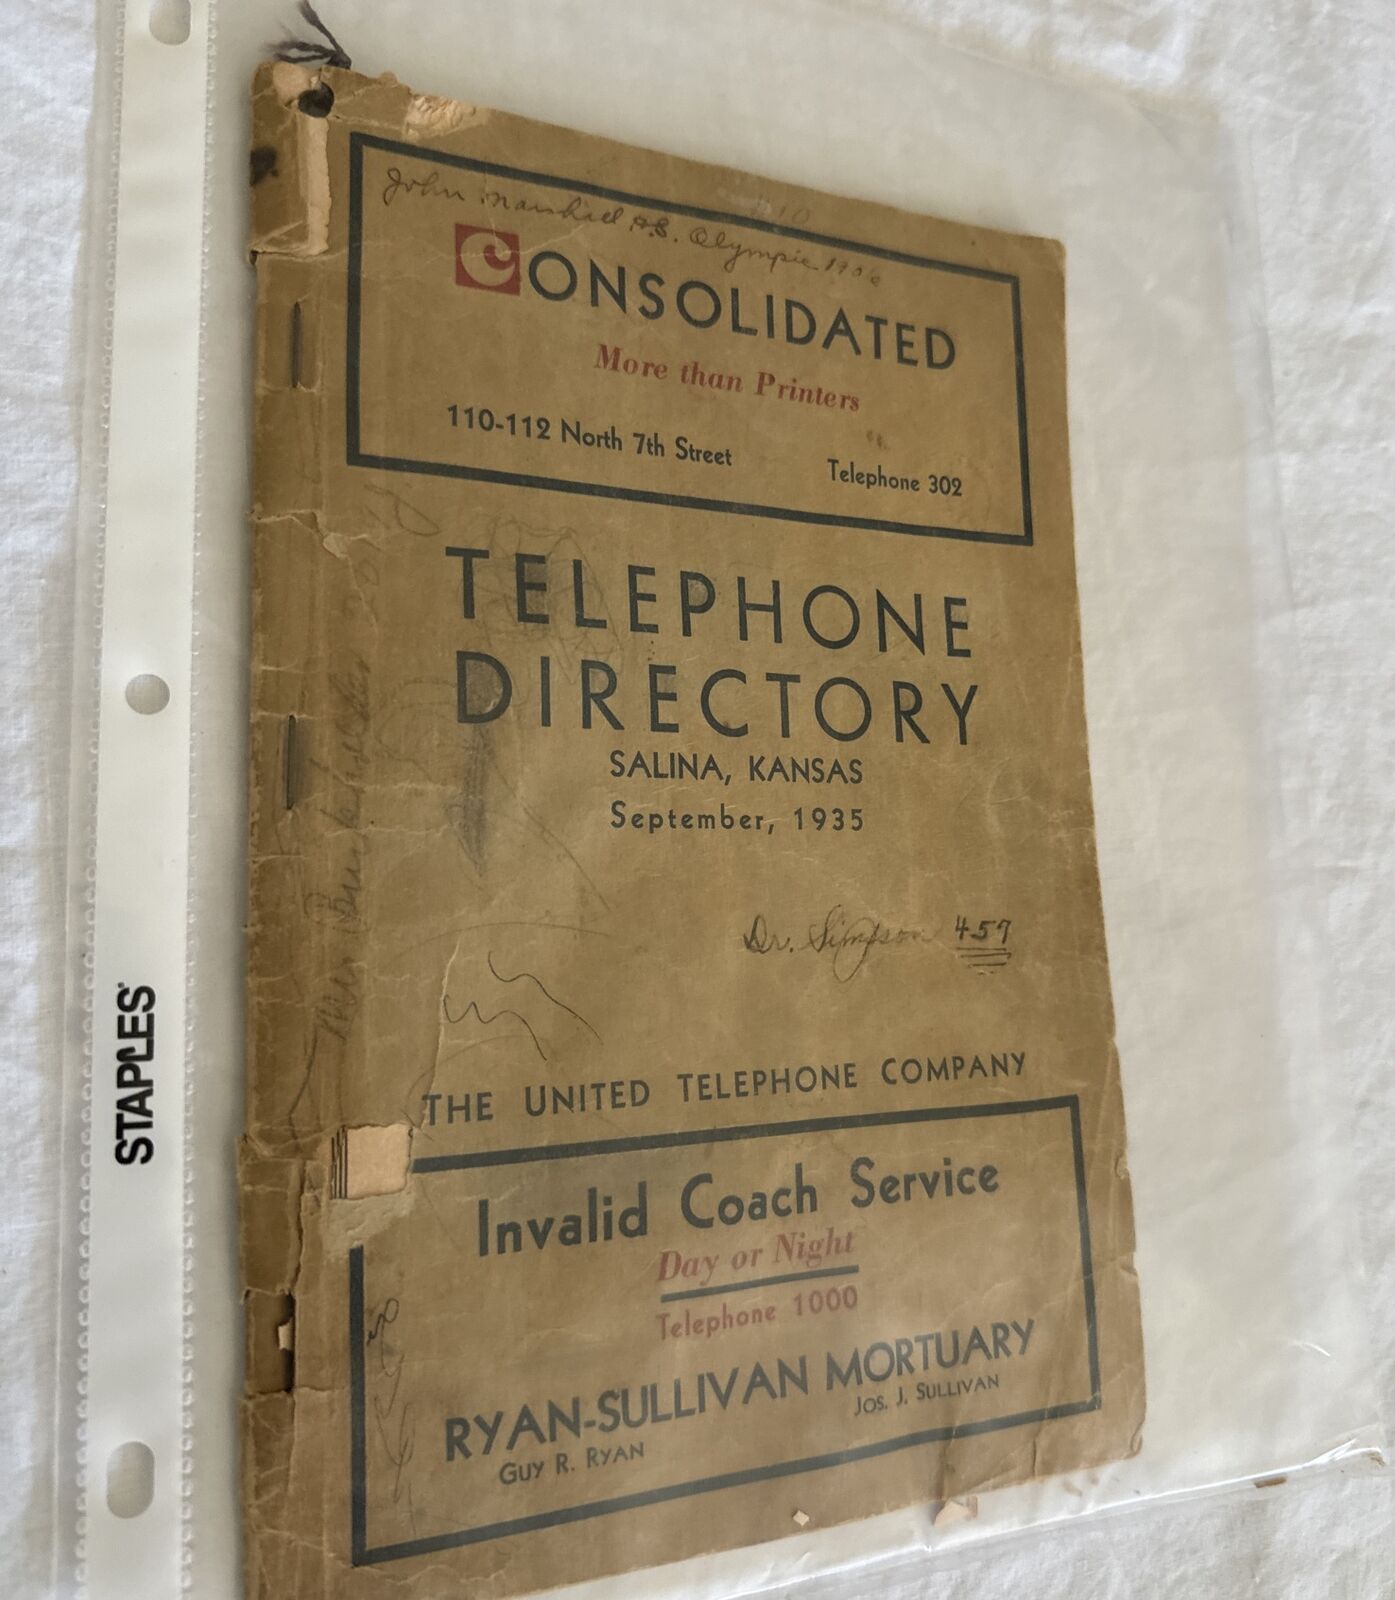 1935 SALINA KANSAS TELEPHONE DIRECTORY BOOK - The United Telephone Company RARE